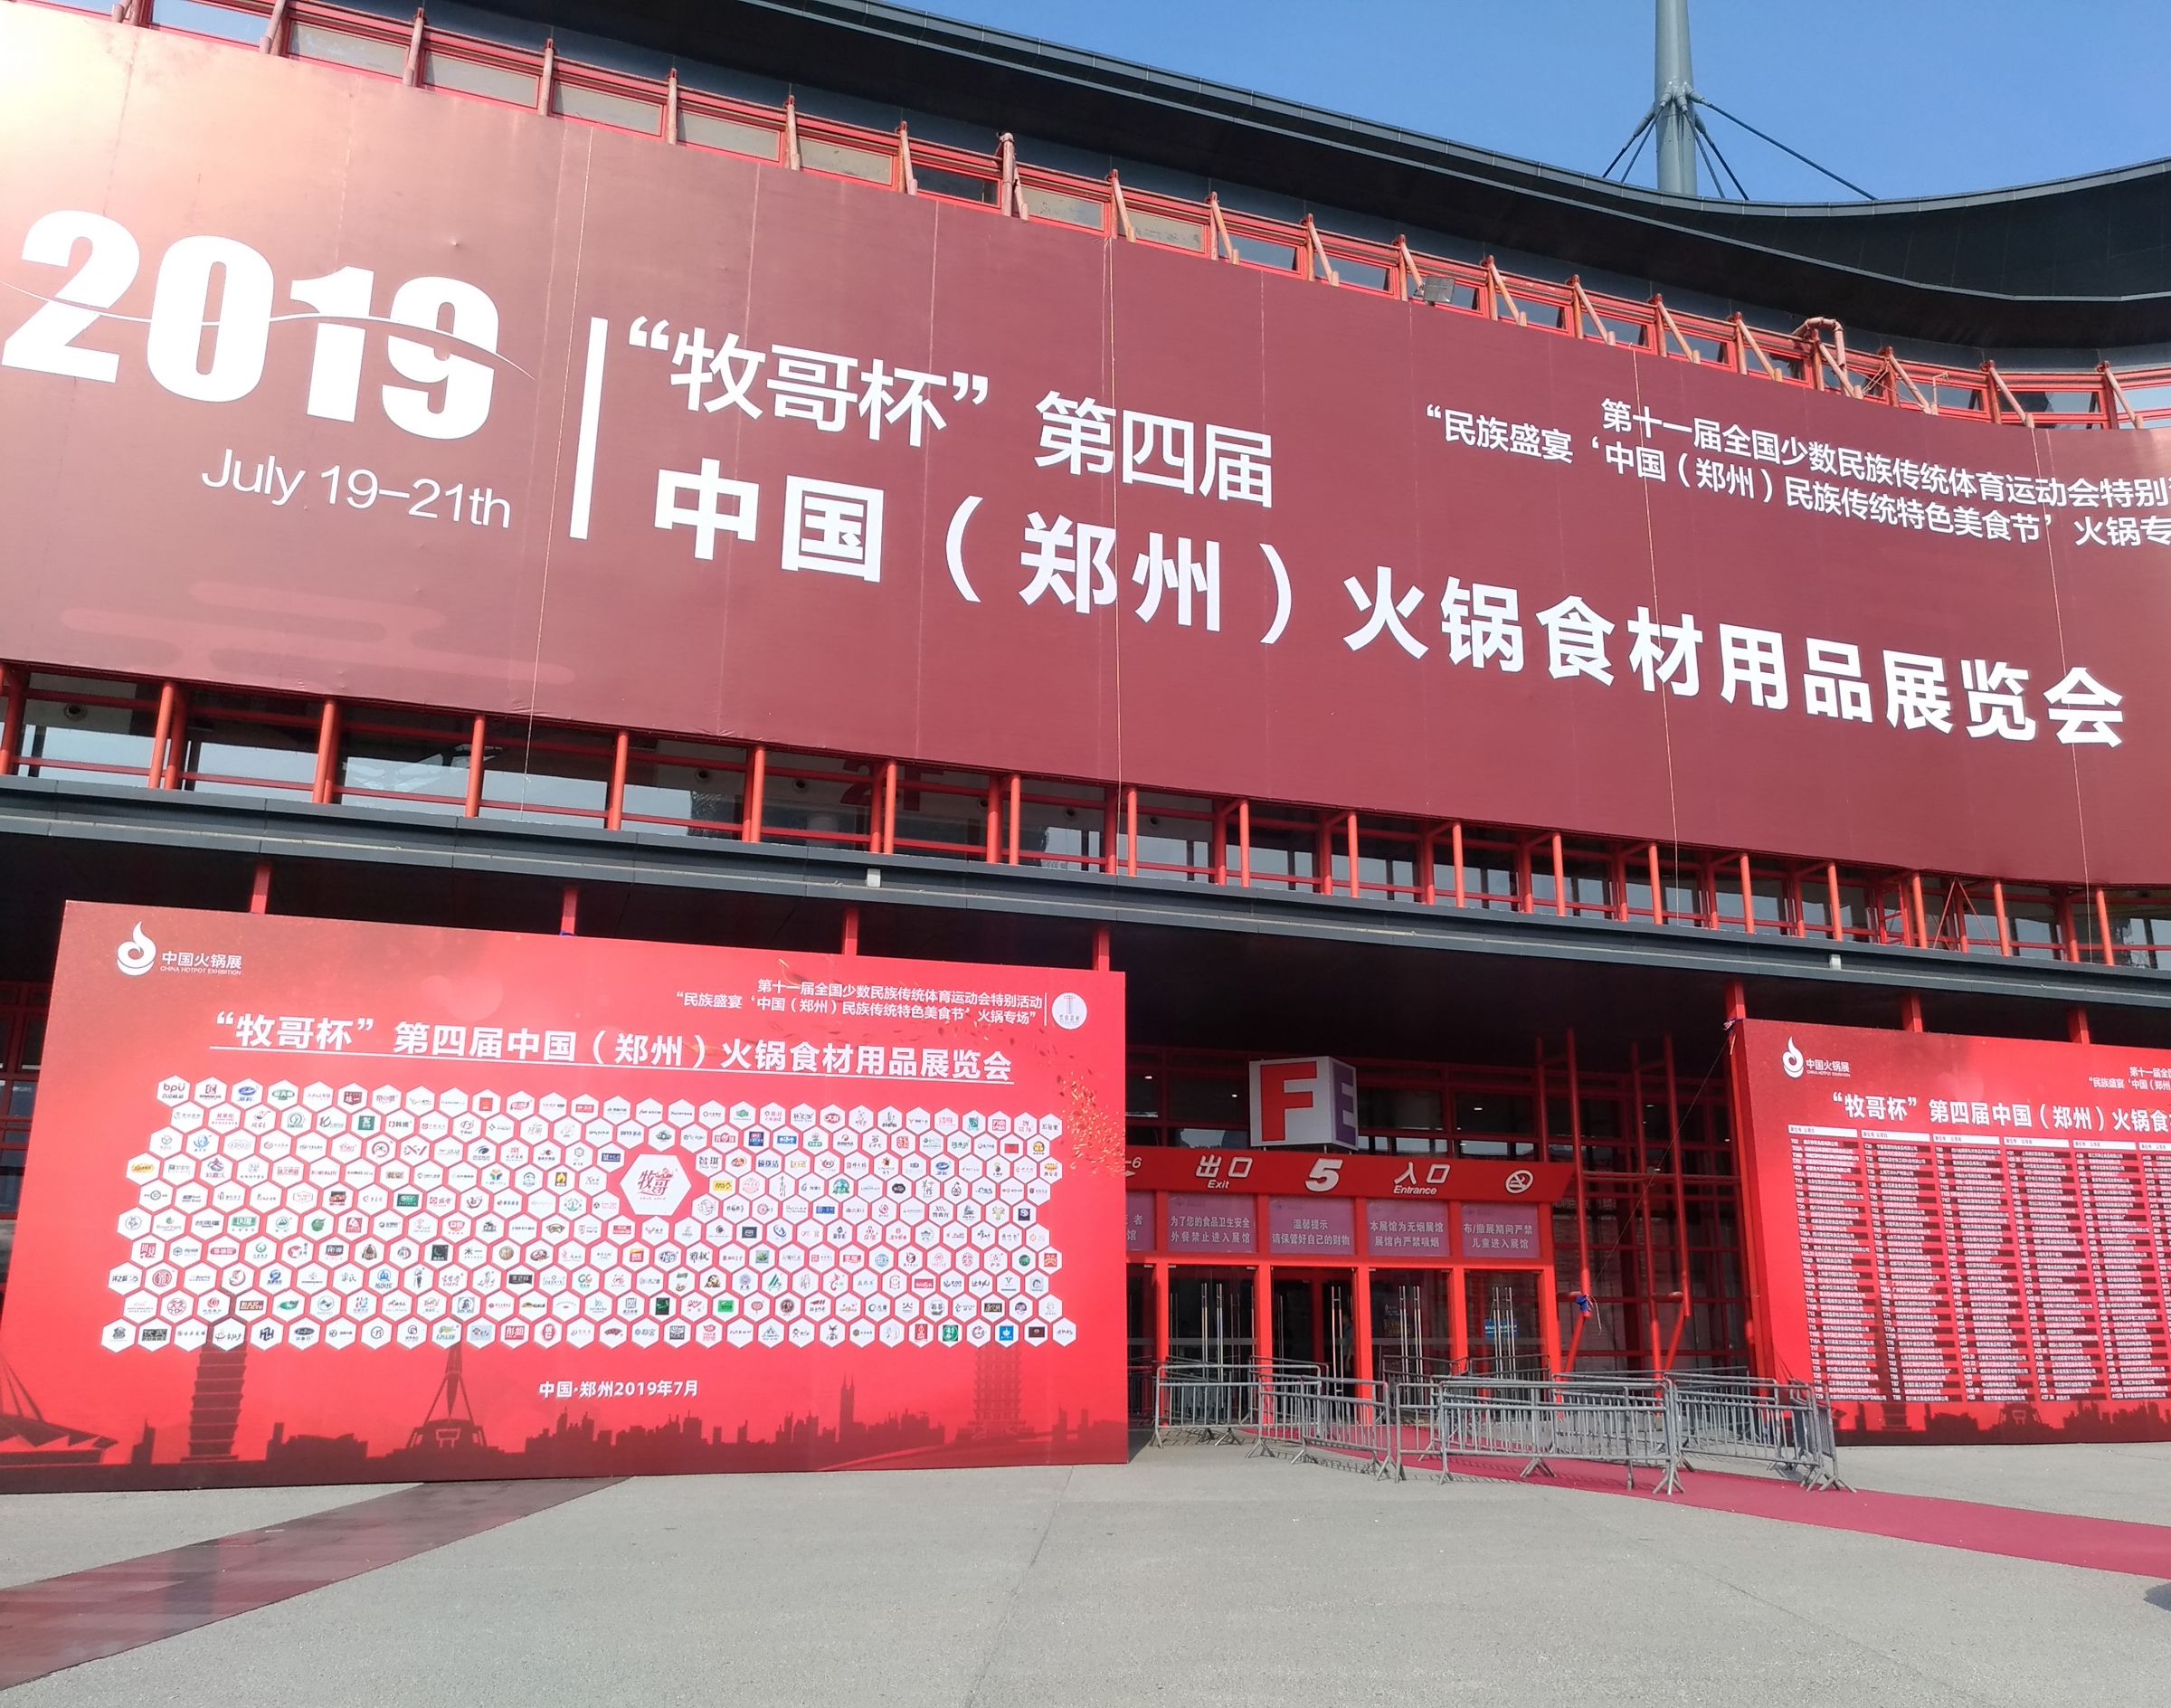 2019 Kina (Zhengzhou) International Hot Pot Food Products Exhibition